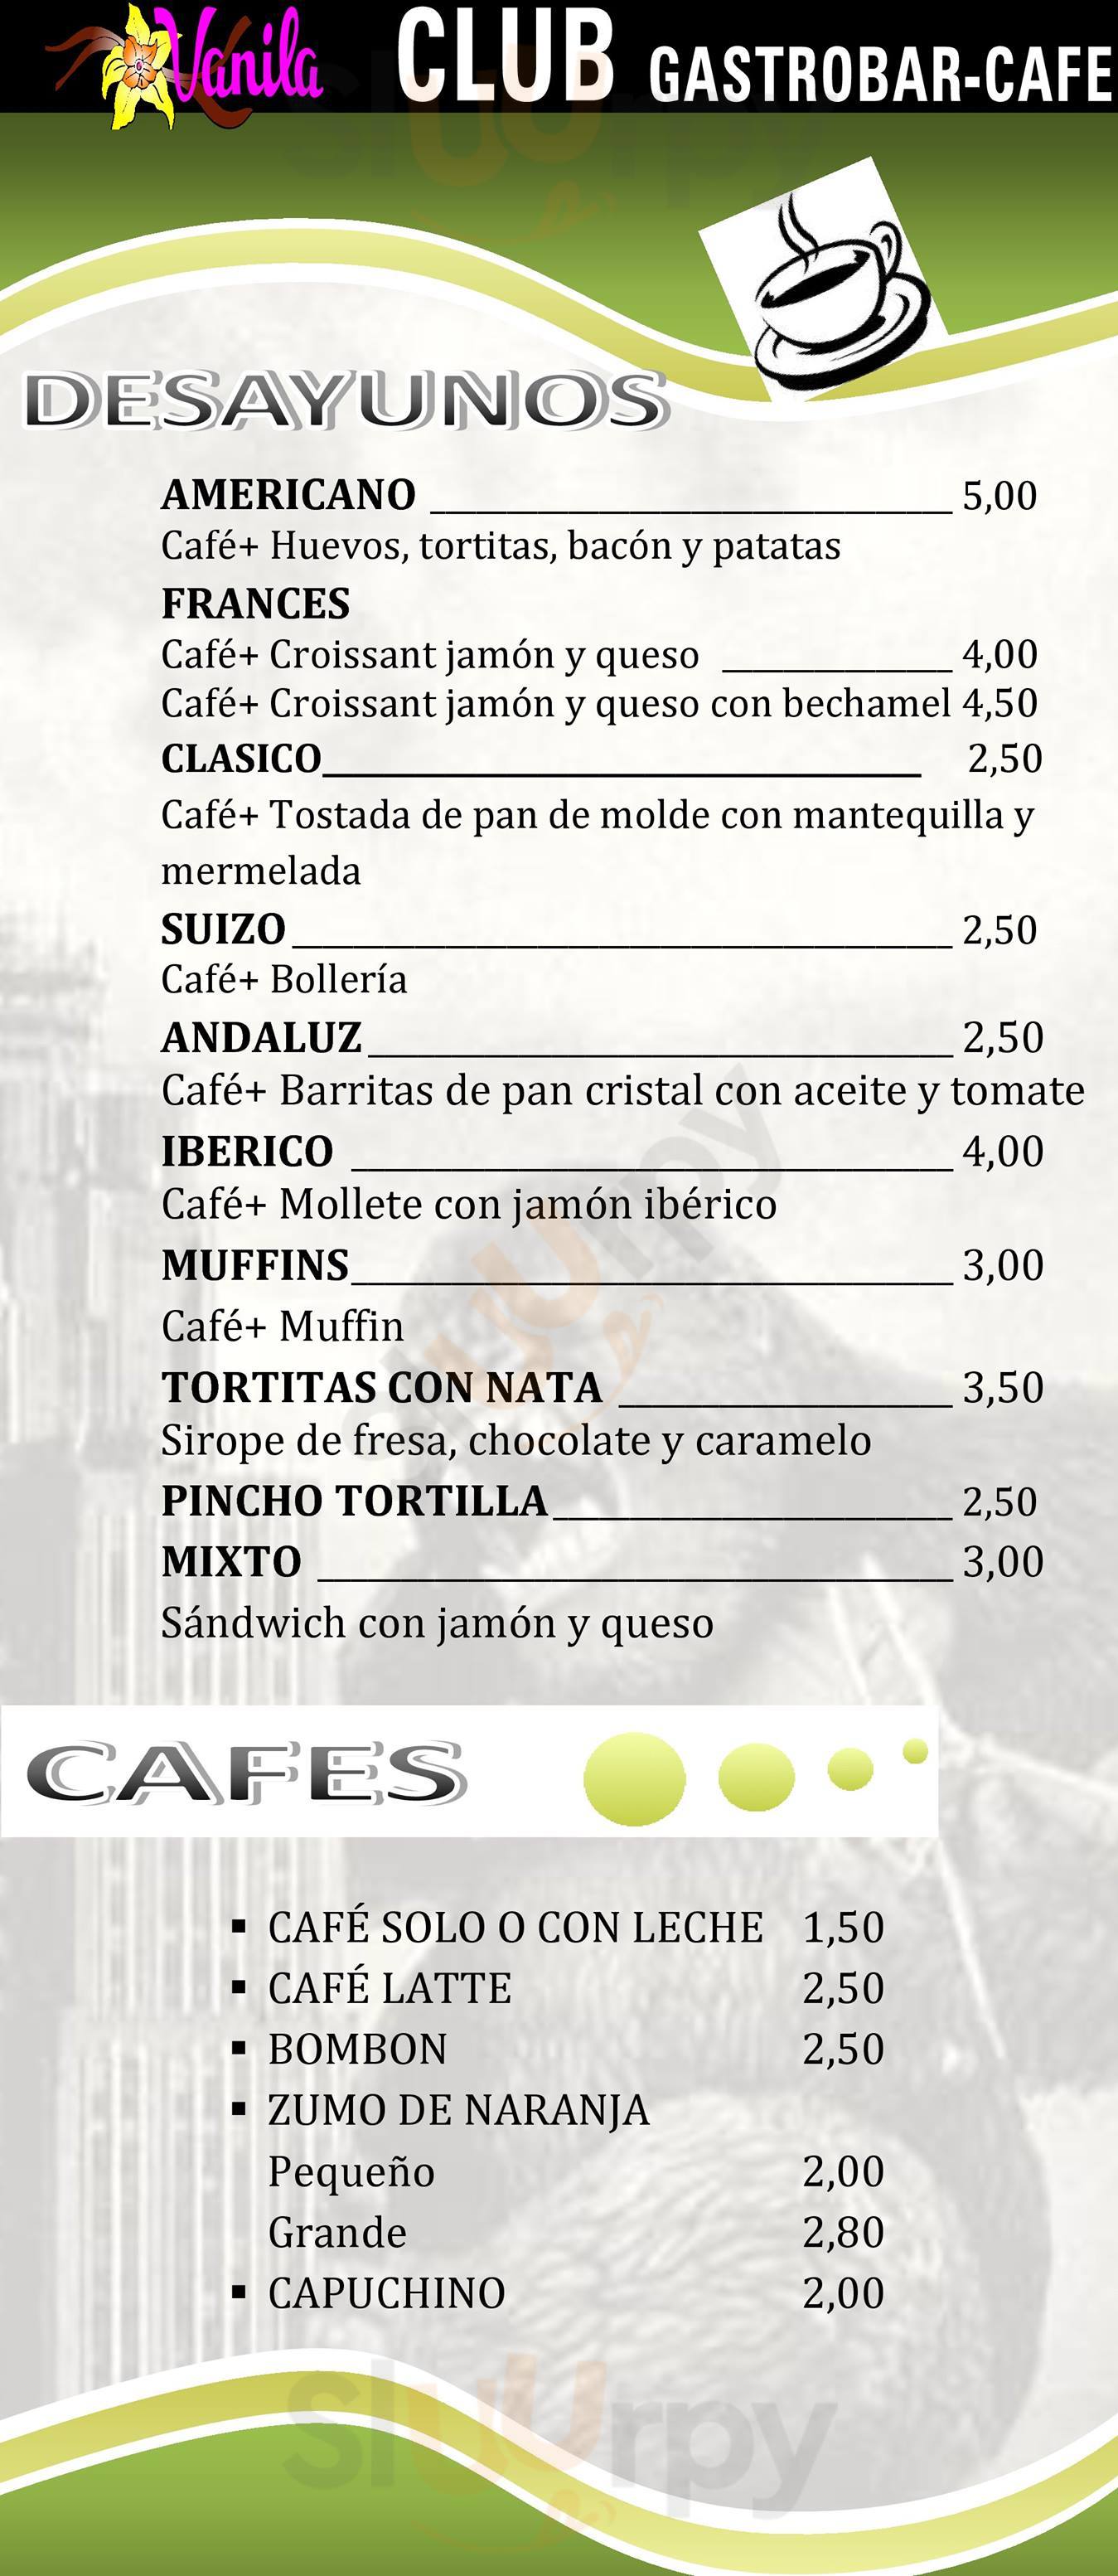 Vanila Club Gastrobar-cafe Alcobendas Menu - 1